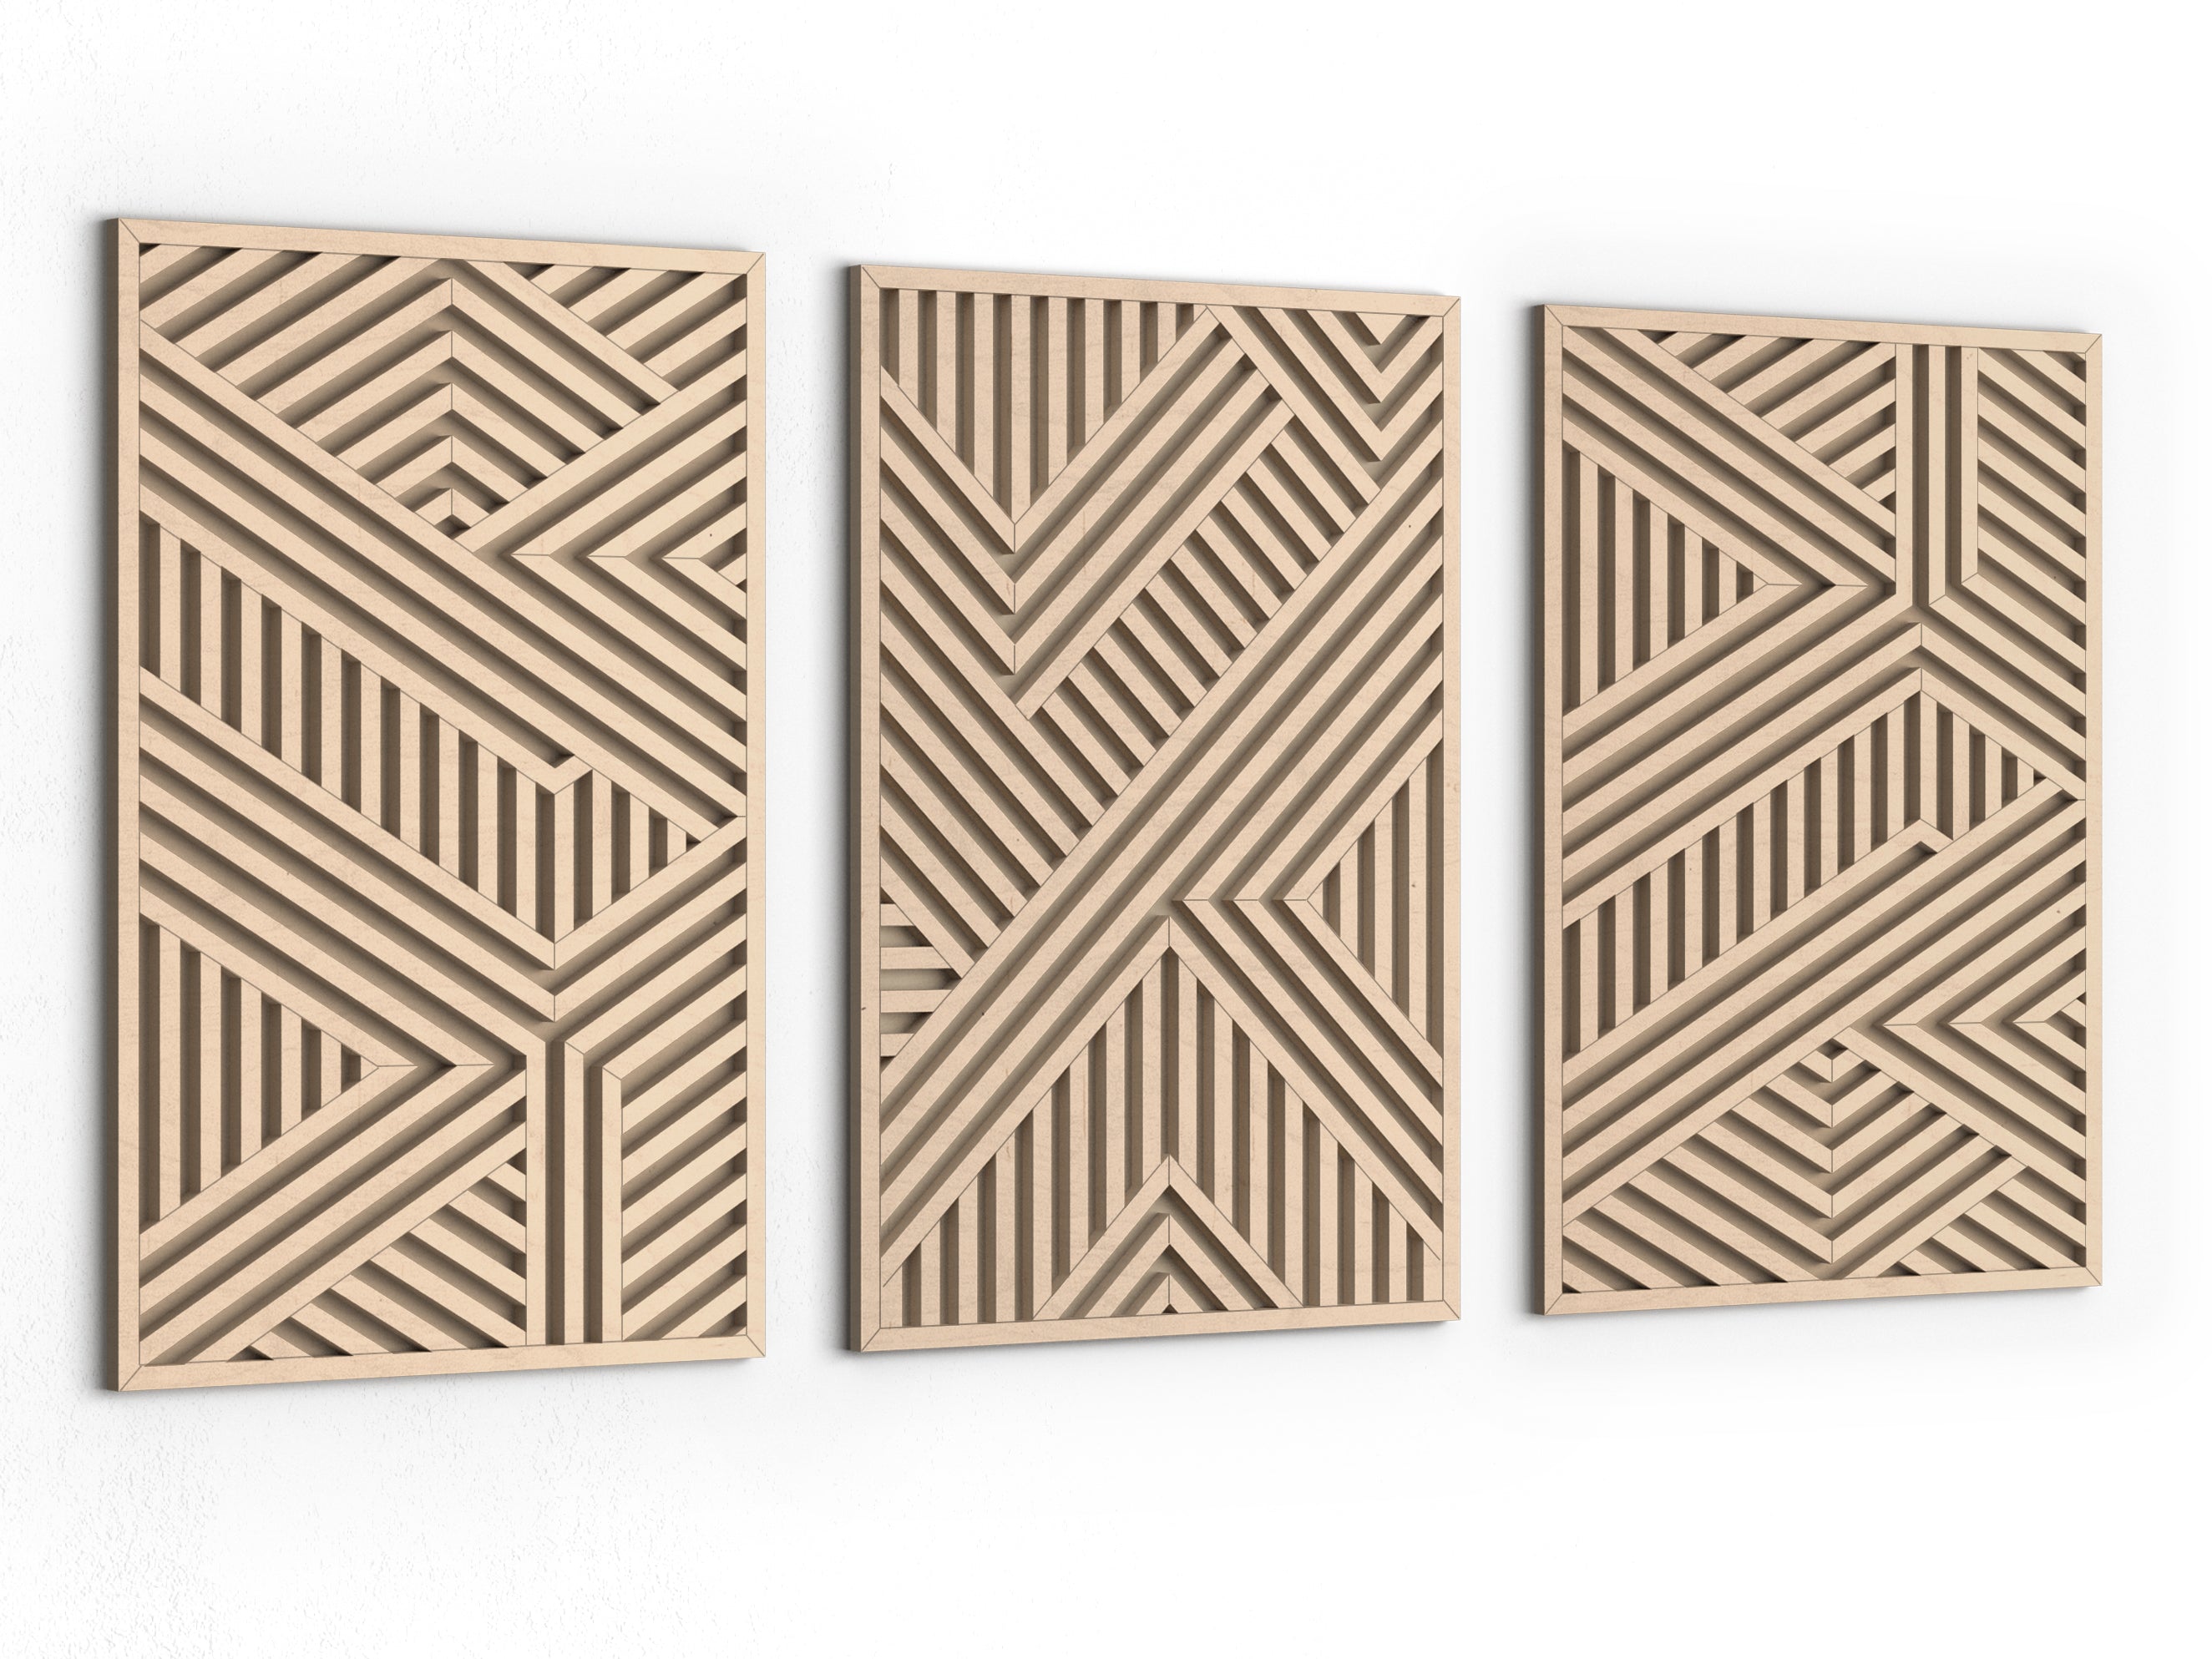 How to Make Geometric Wood Wall Art